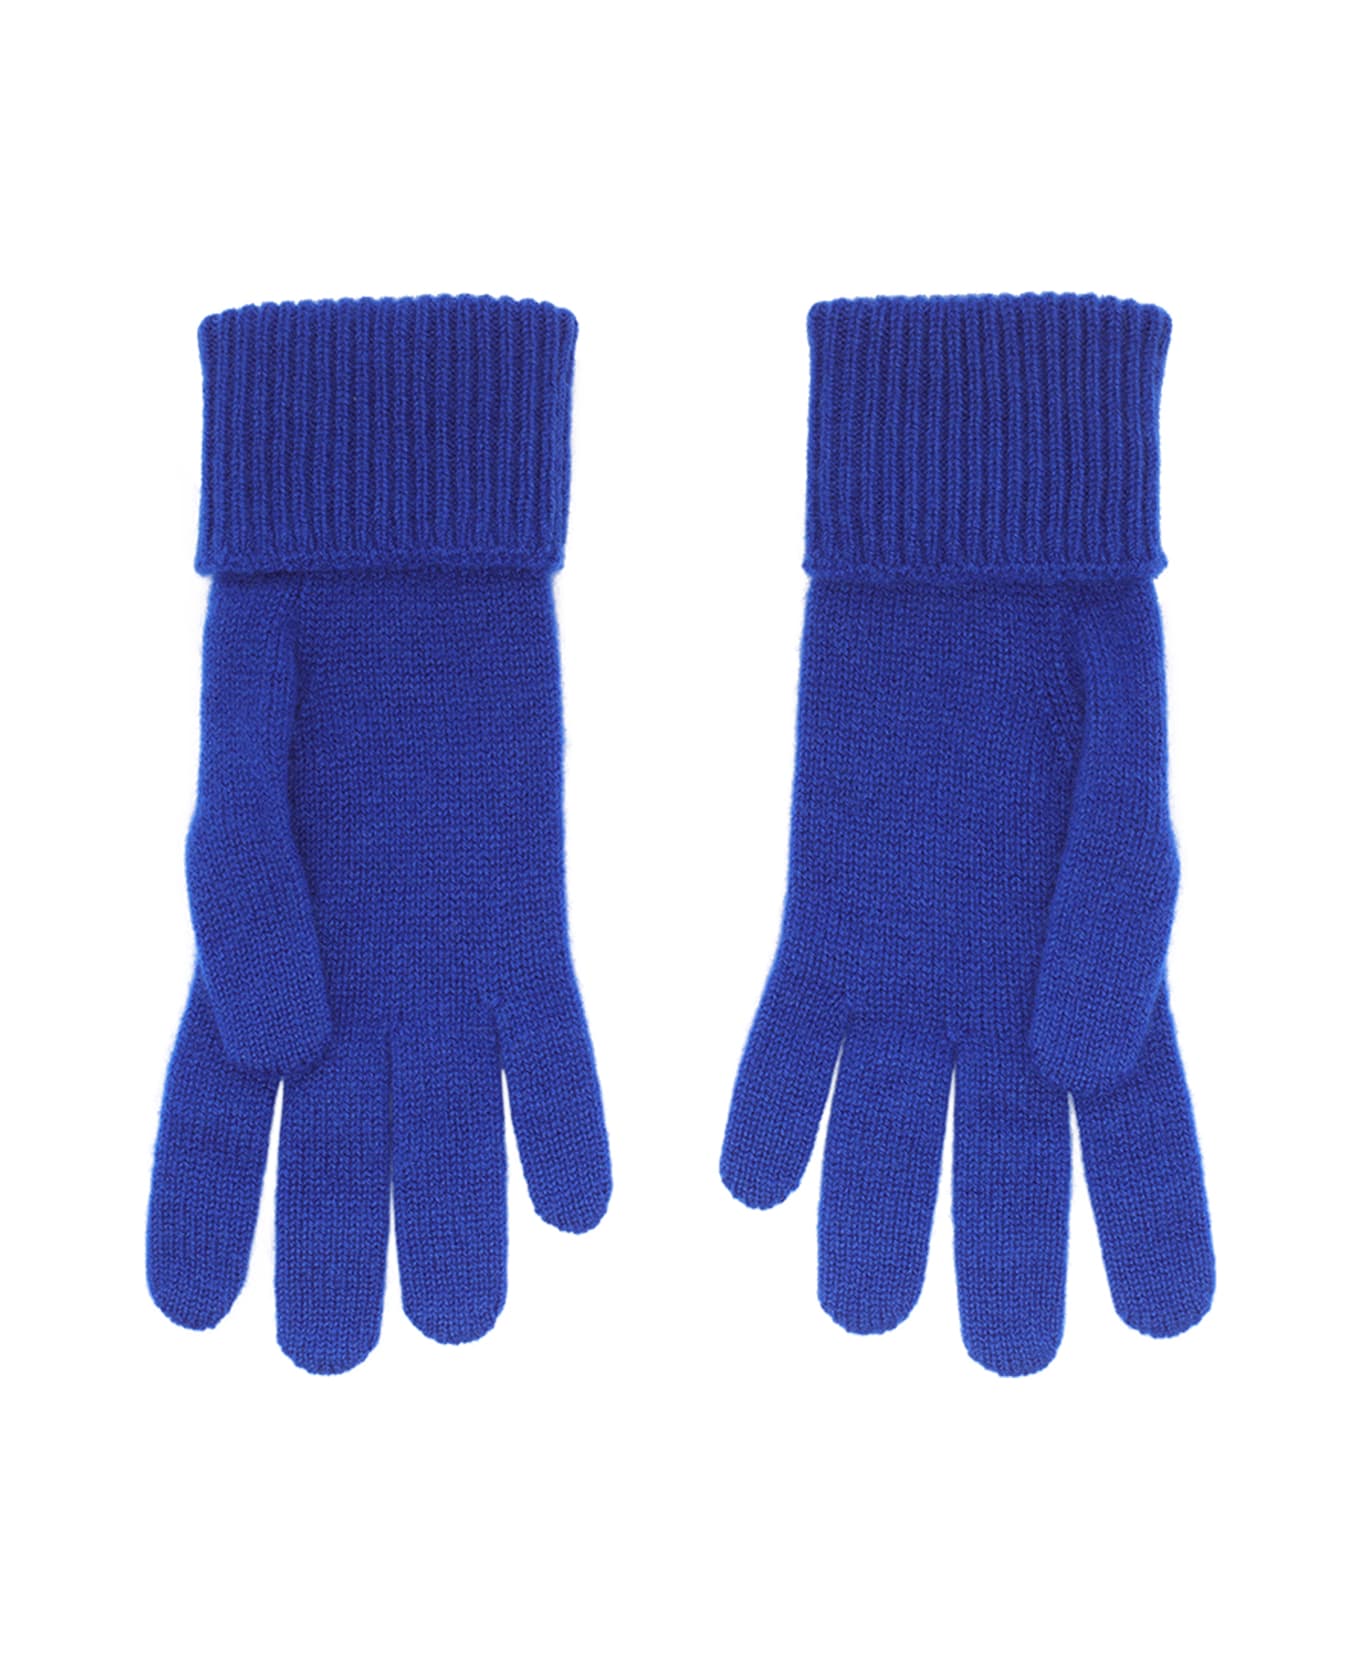 Burberry Ekd Gloves - Blue